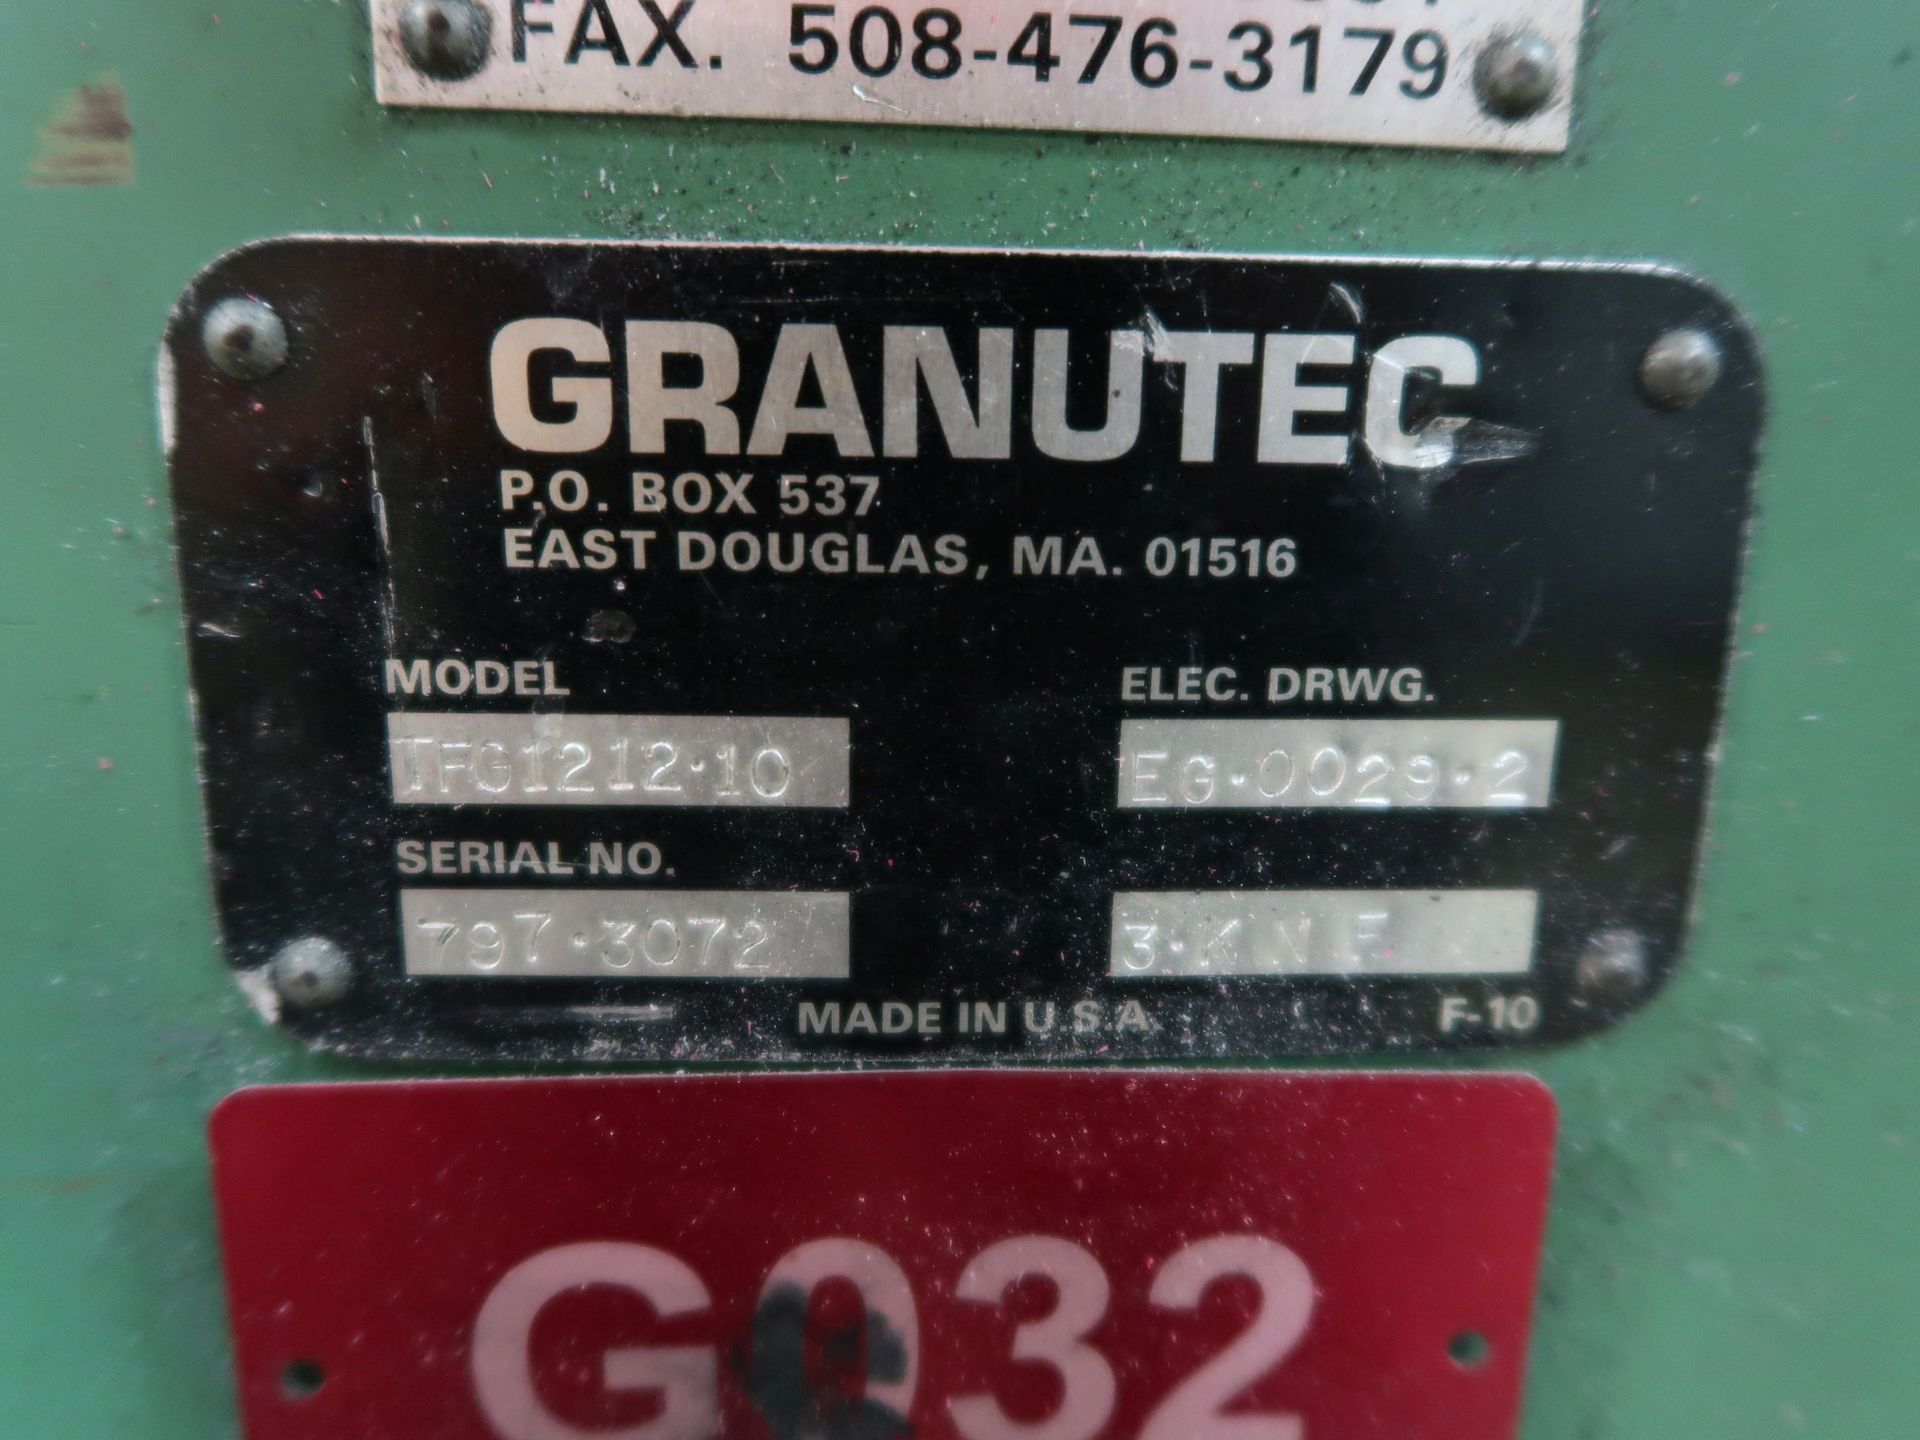 10 HP GRANUTEC MODEL TFG1212-10 GRANULATOR; S/N 797-3072 - Image 5 of 5